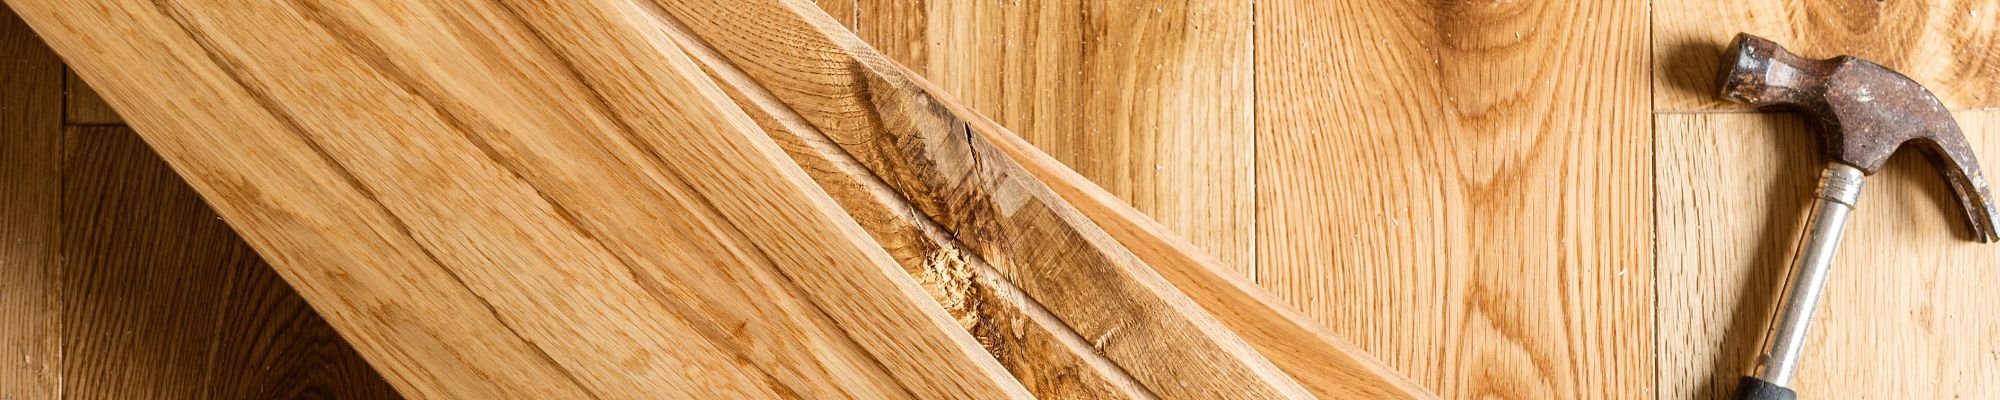 Hammer on hardwood planks - Flooring installation and consultation services from Carpet Innovations in Denver, CO